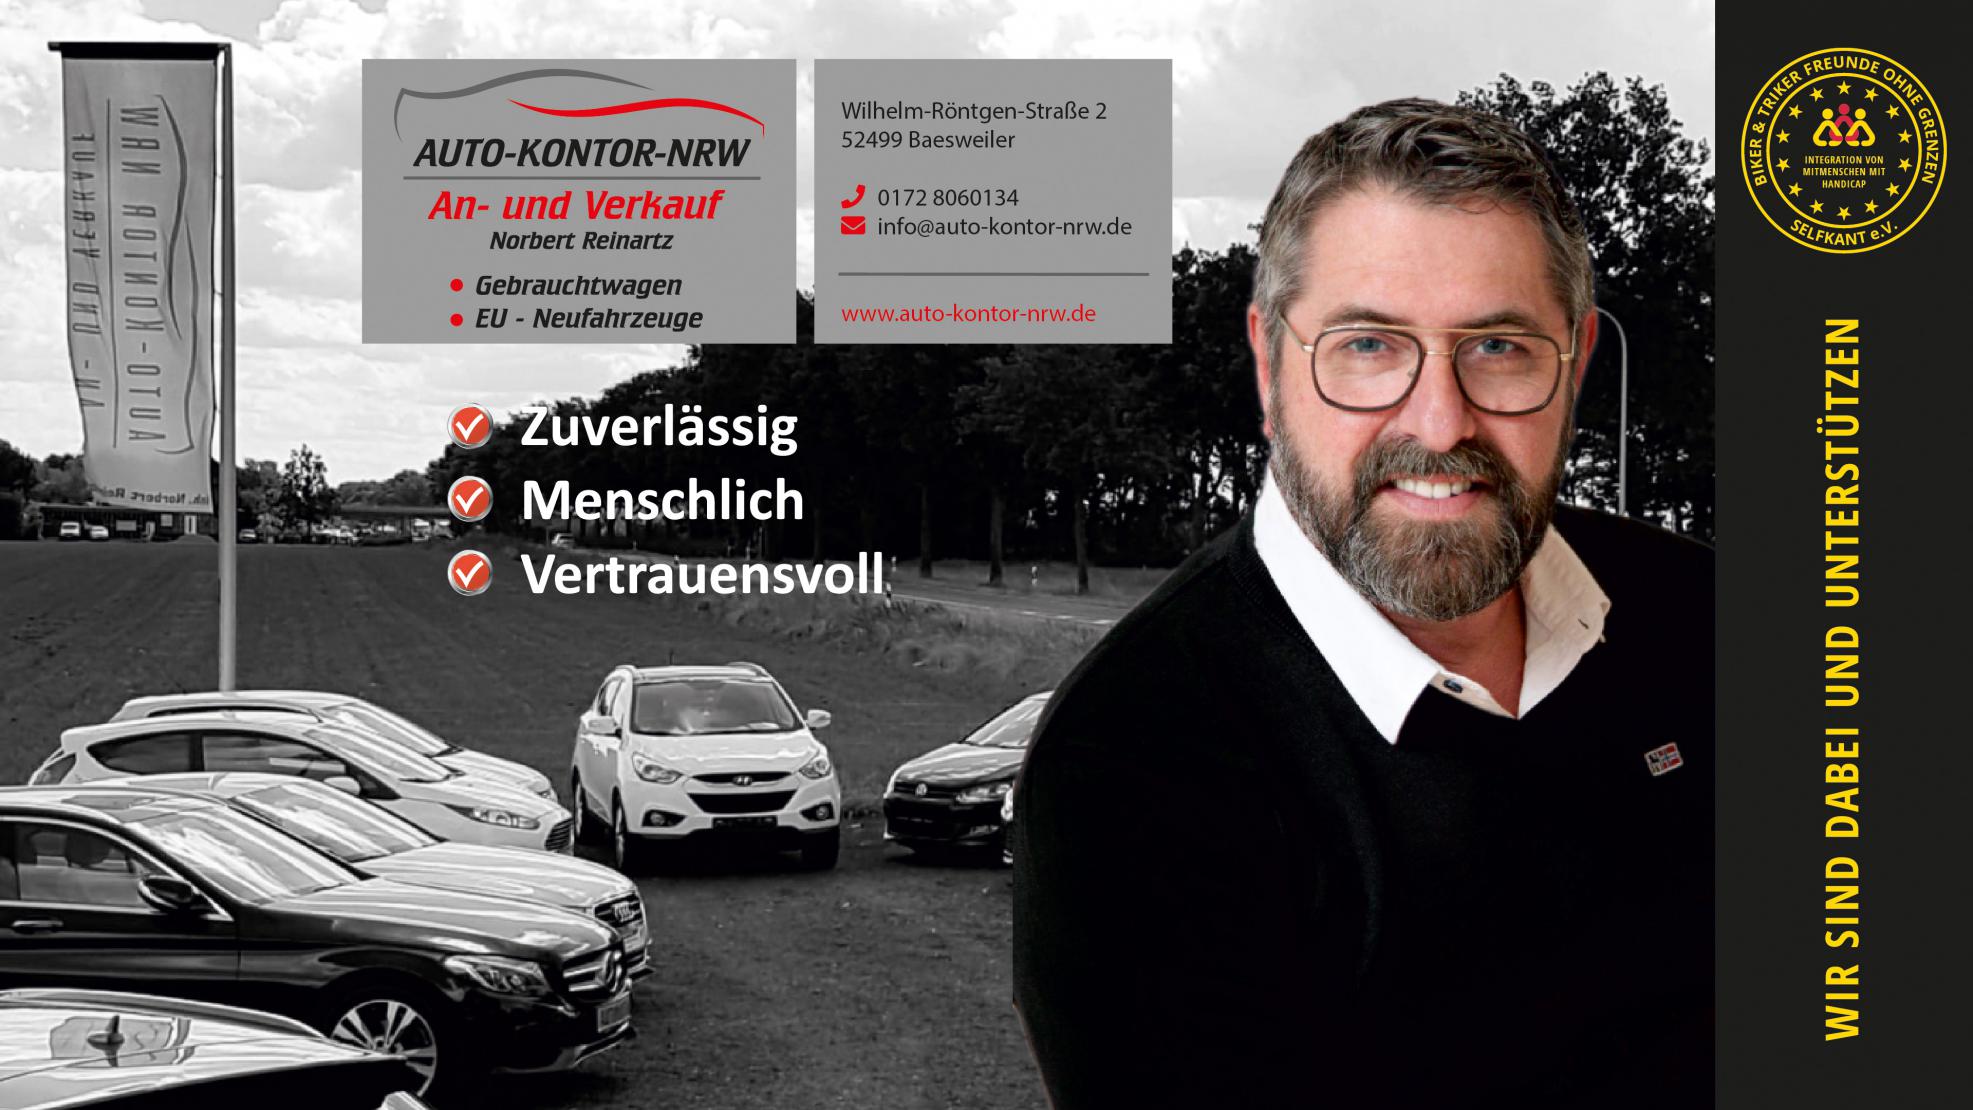 Auto Kontor NRW